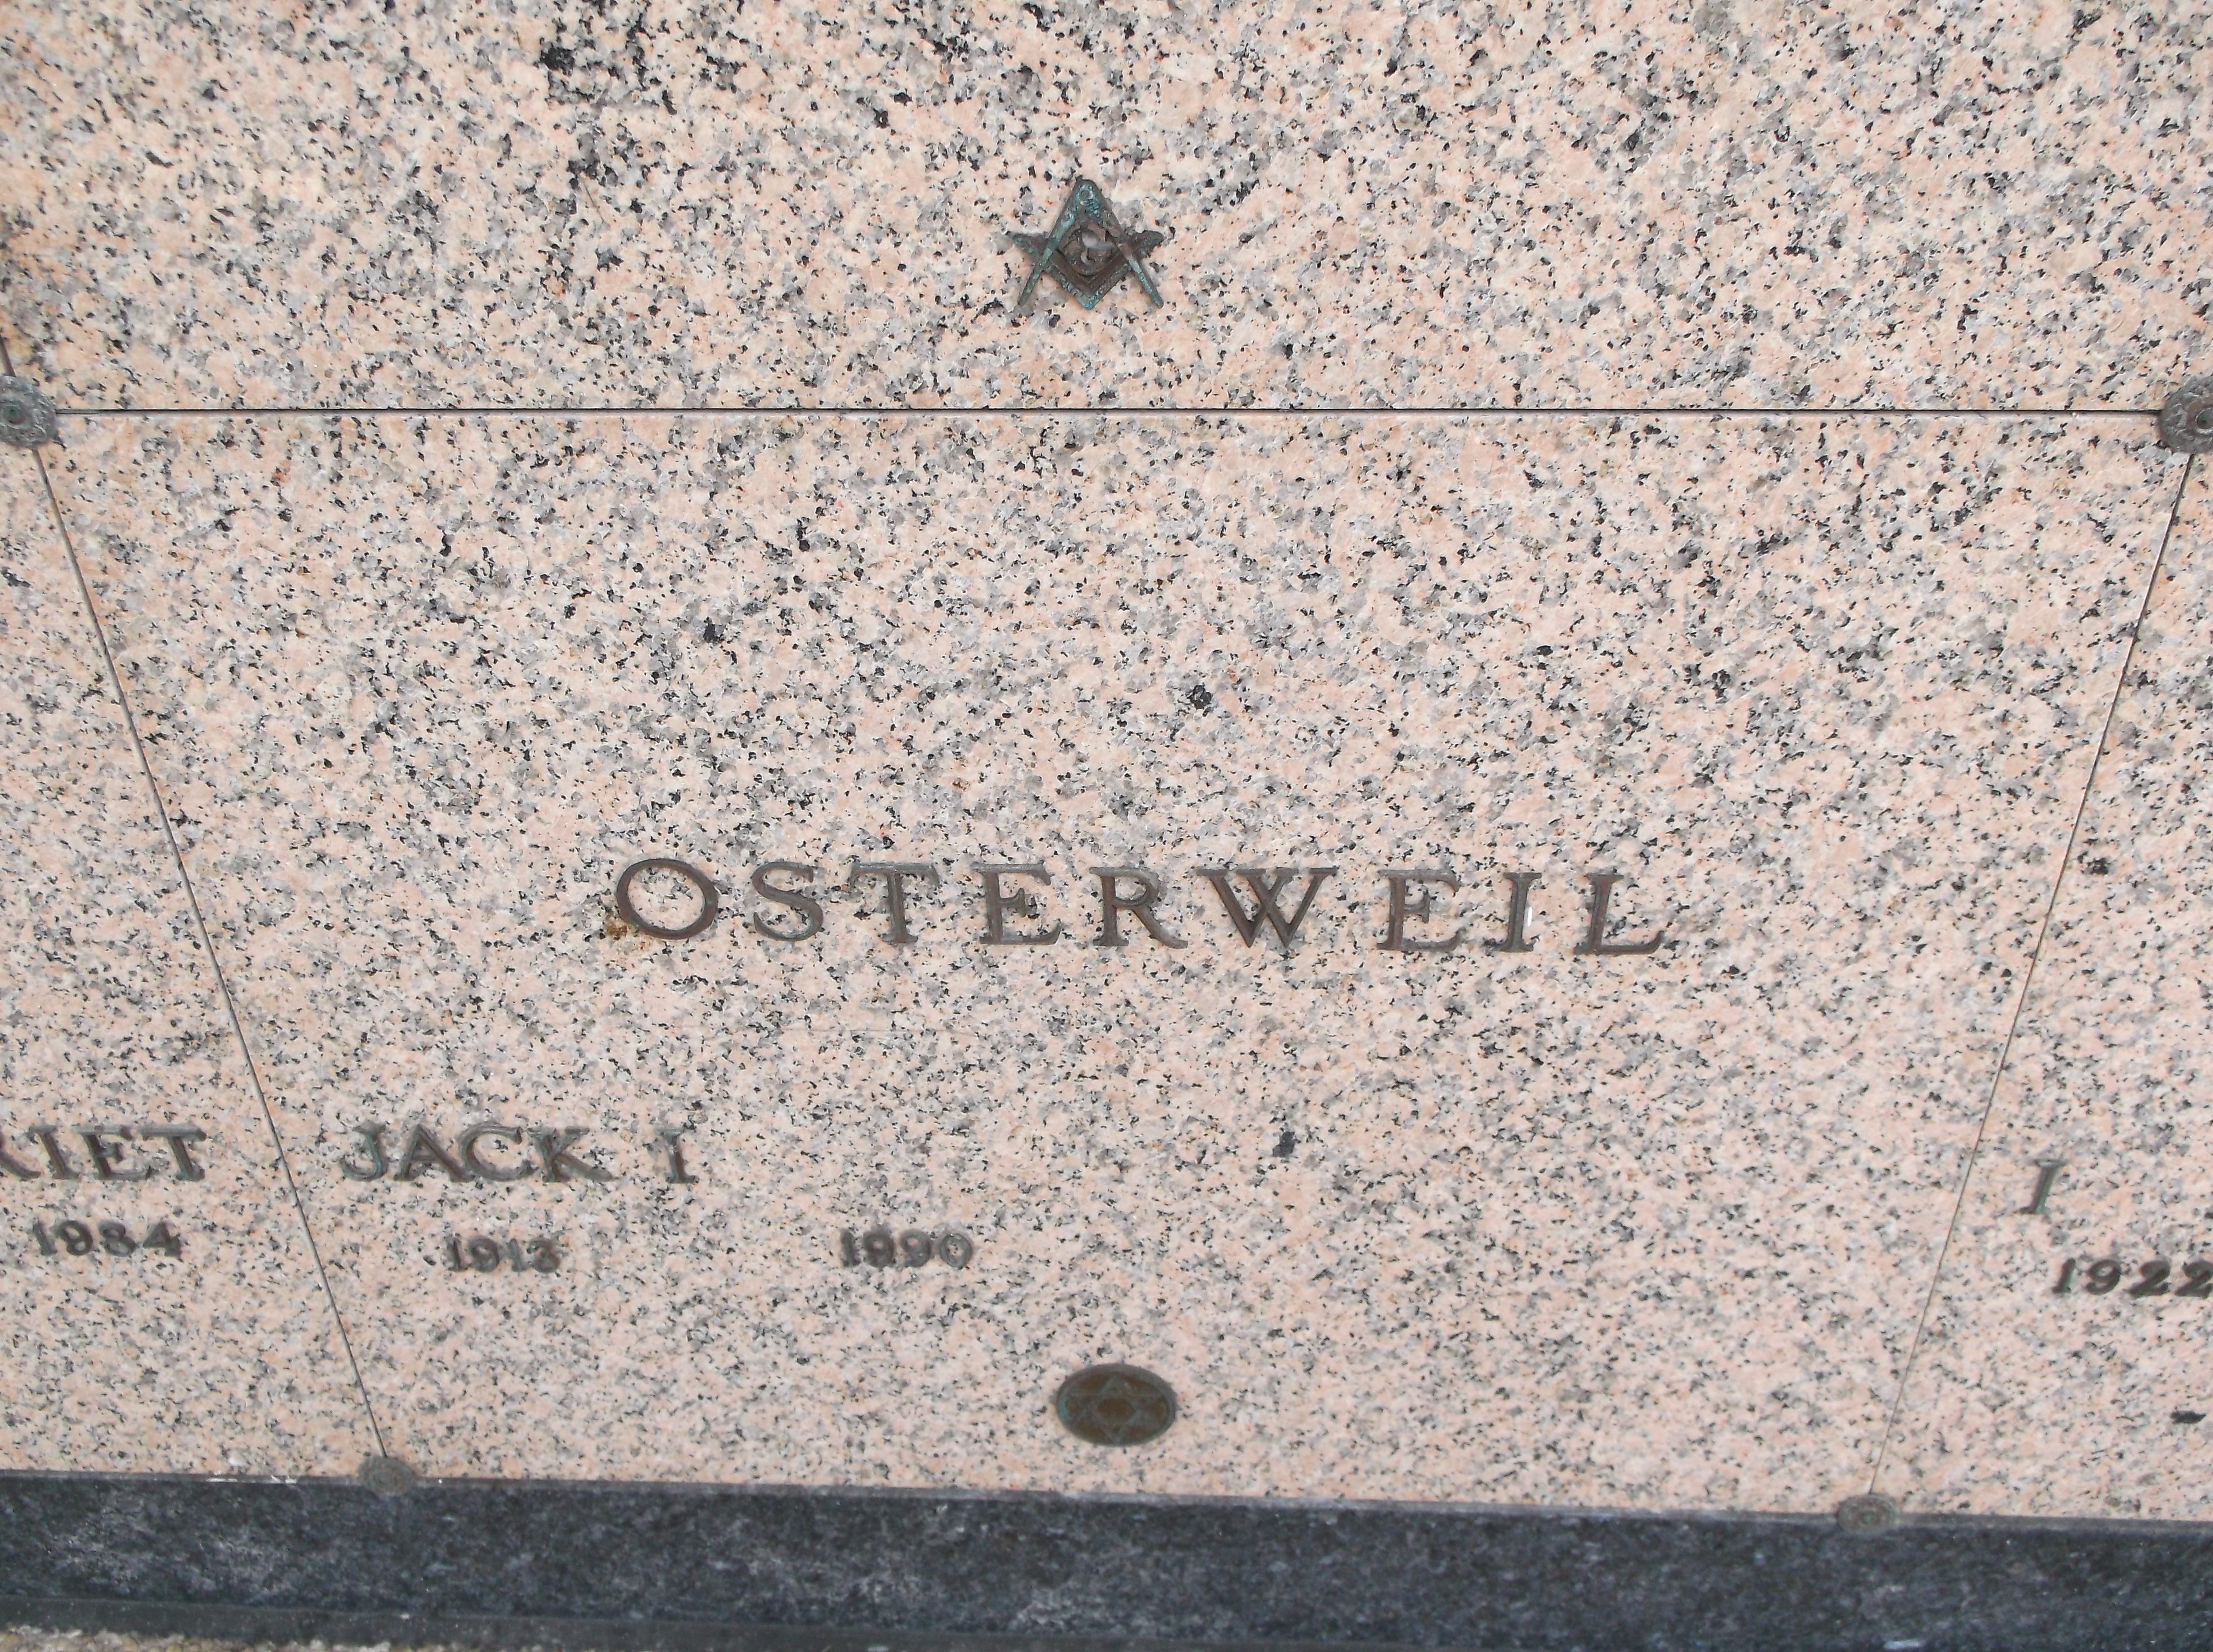 Jack I Osterwell